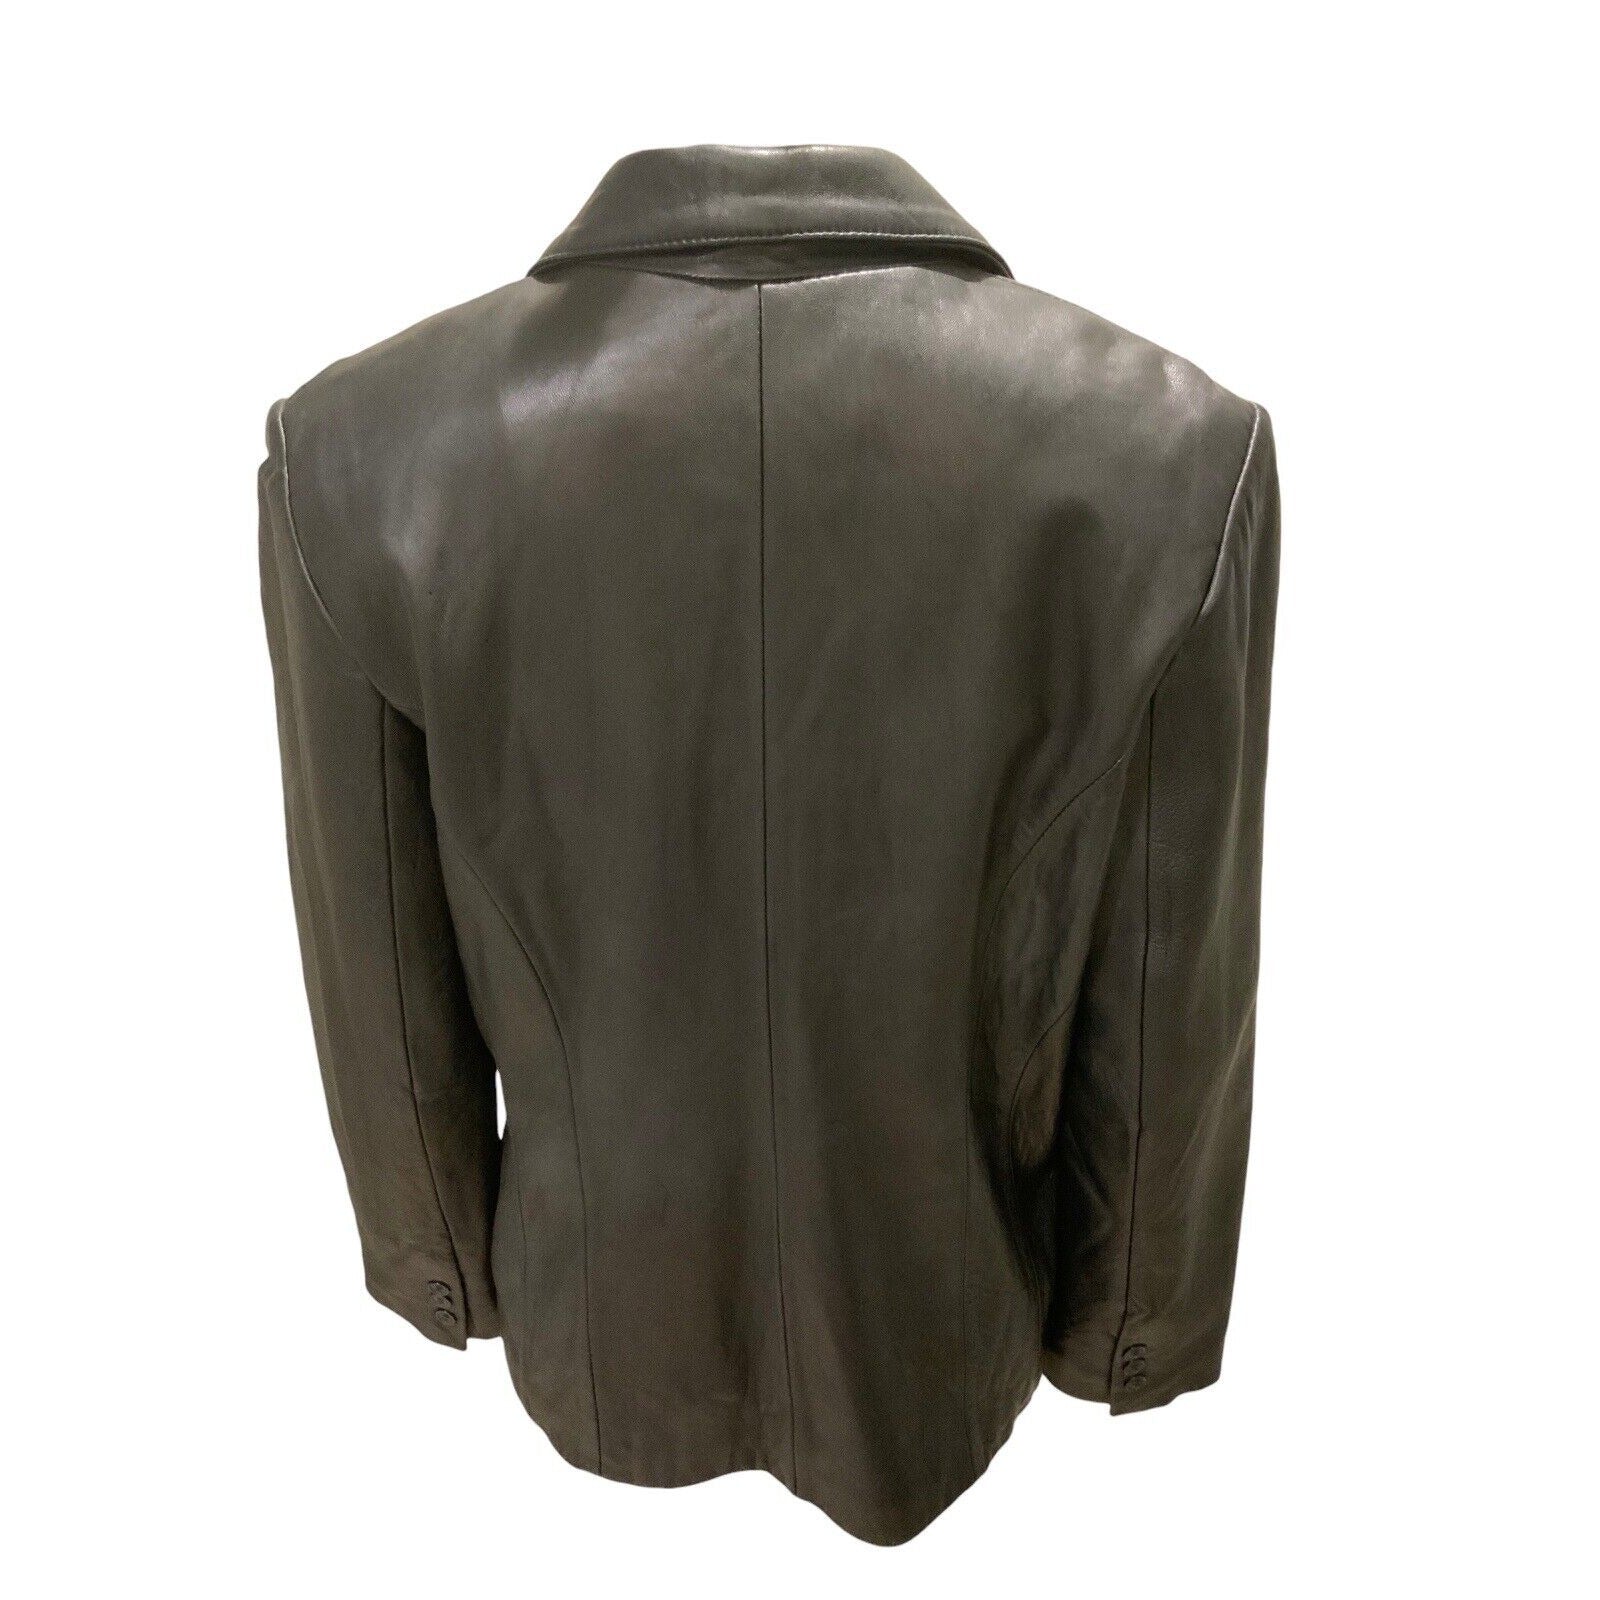 Back View Of Women's Leather Blazer Jacket